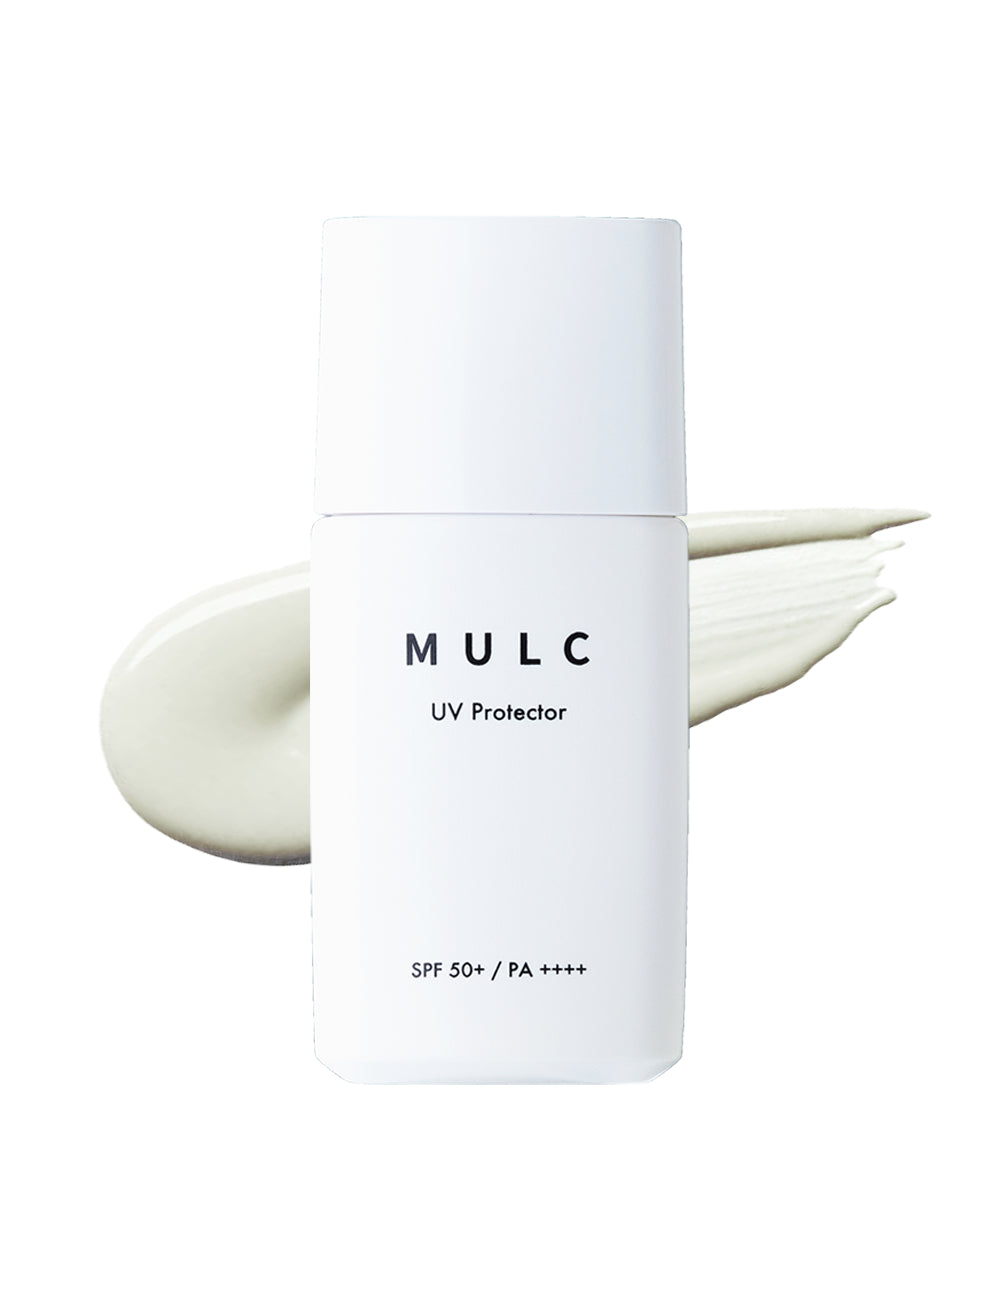 MULC UVプロテクター - MULCオンラインショップ